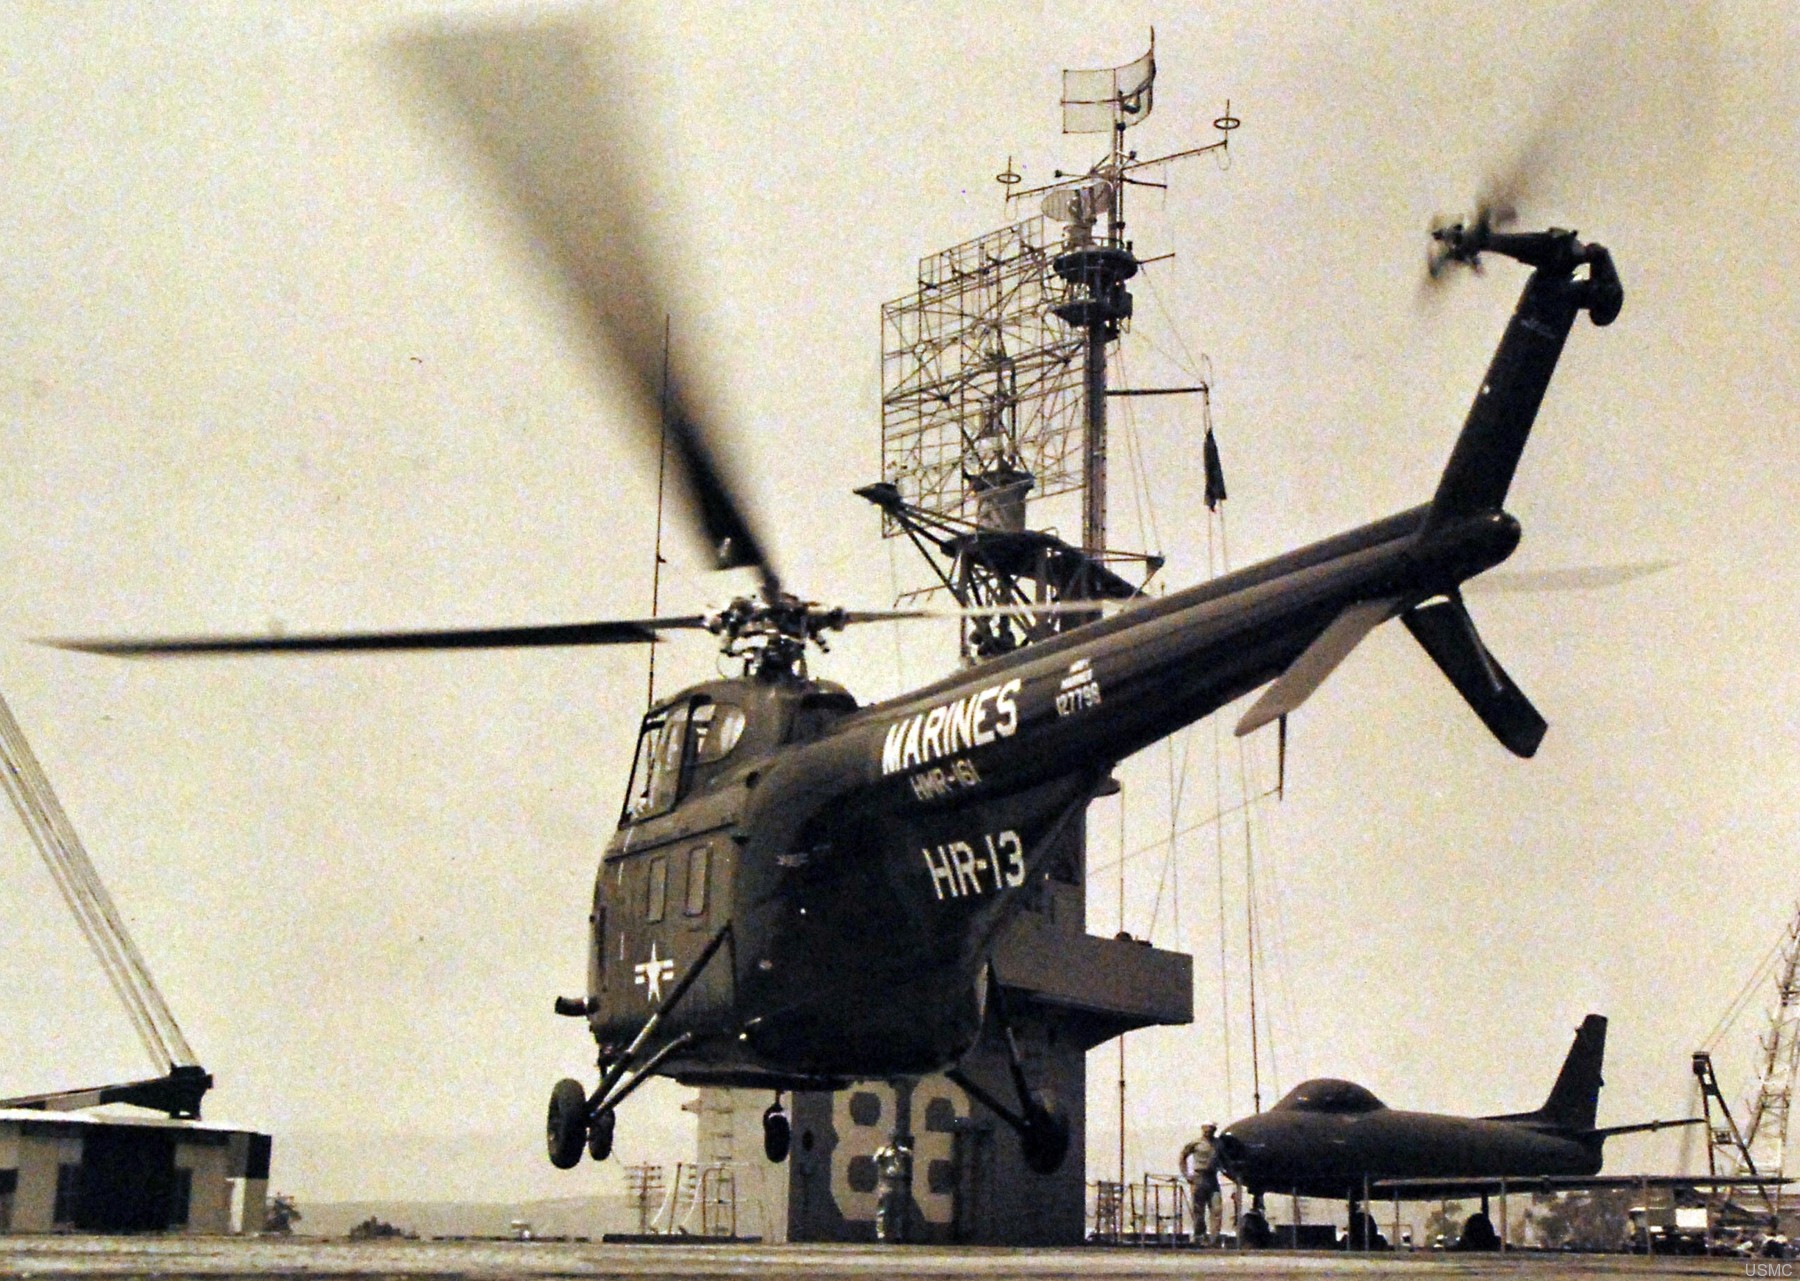 hmr-161 greyhawks marine helicopter transport squadron sikorsky hrs-1 usmc 12 uss sitko bay cve-86